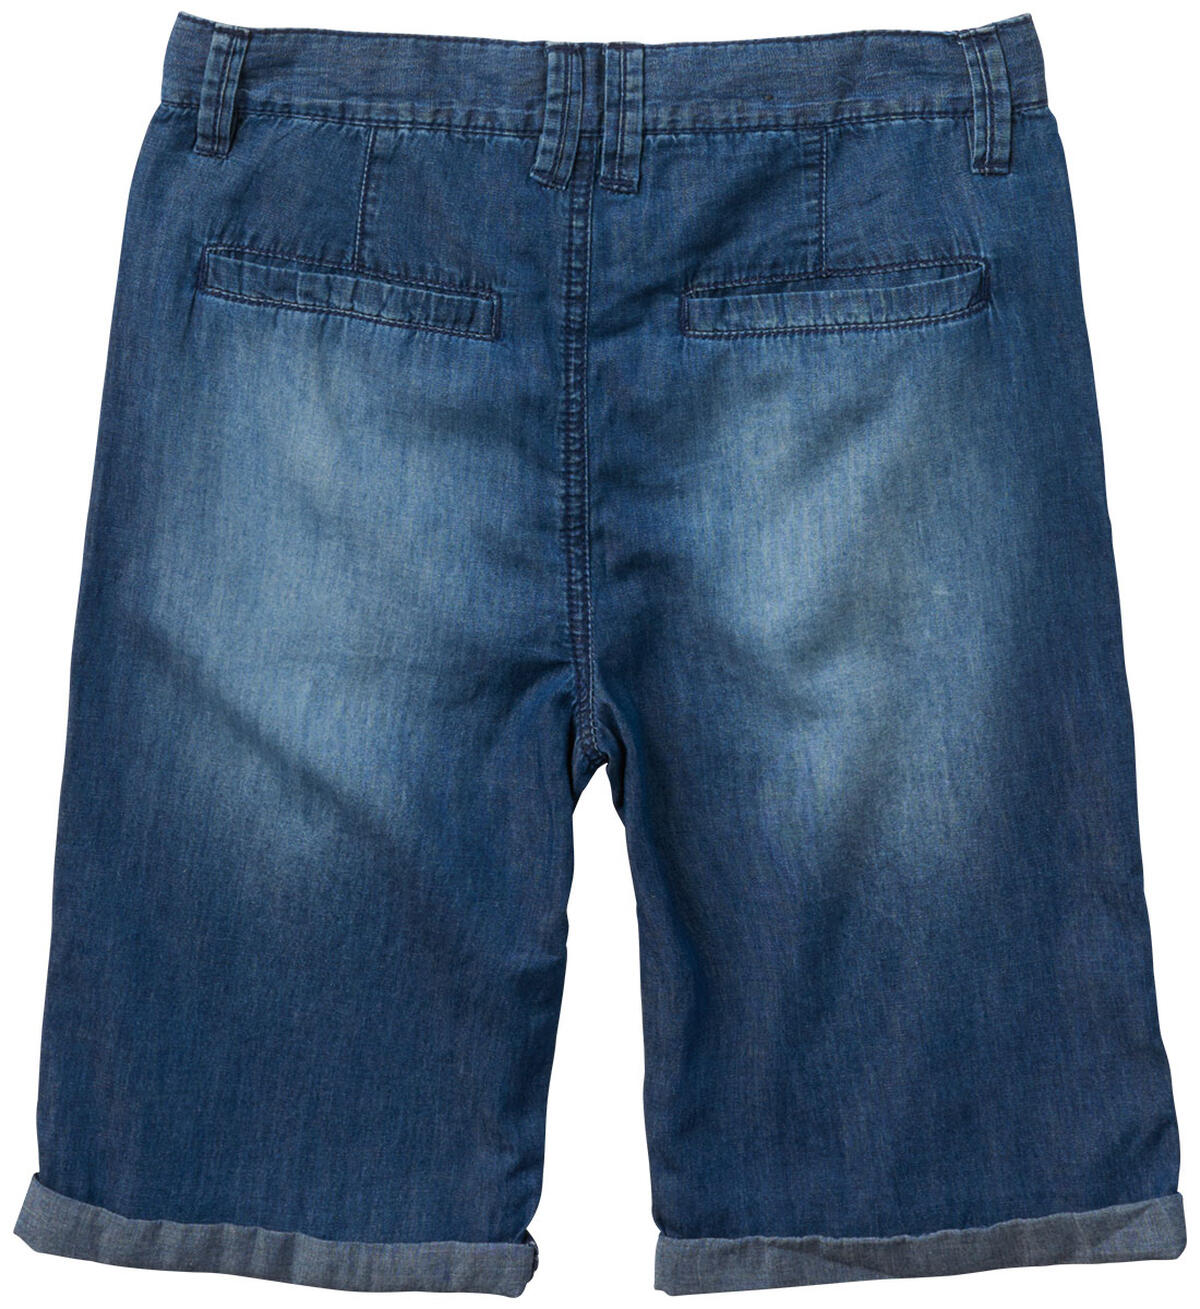 Denim Shorts in Medium Wash (4-7), , hi-res image number 1